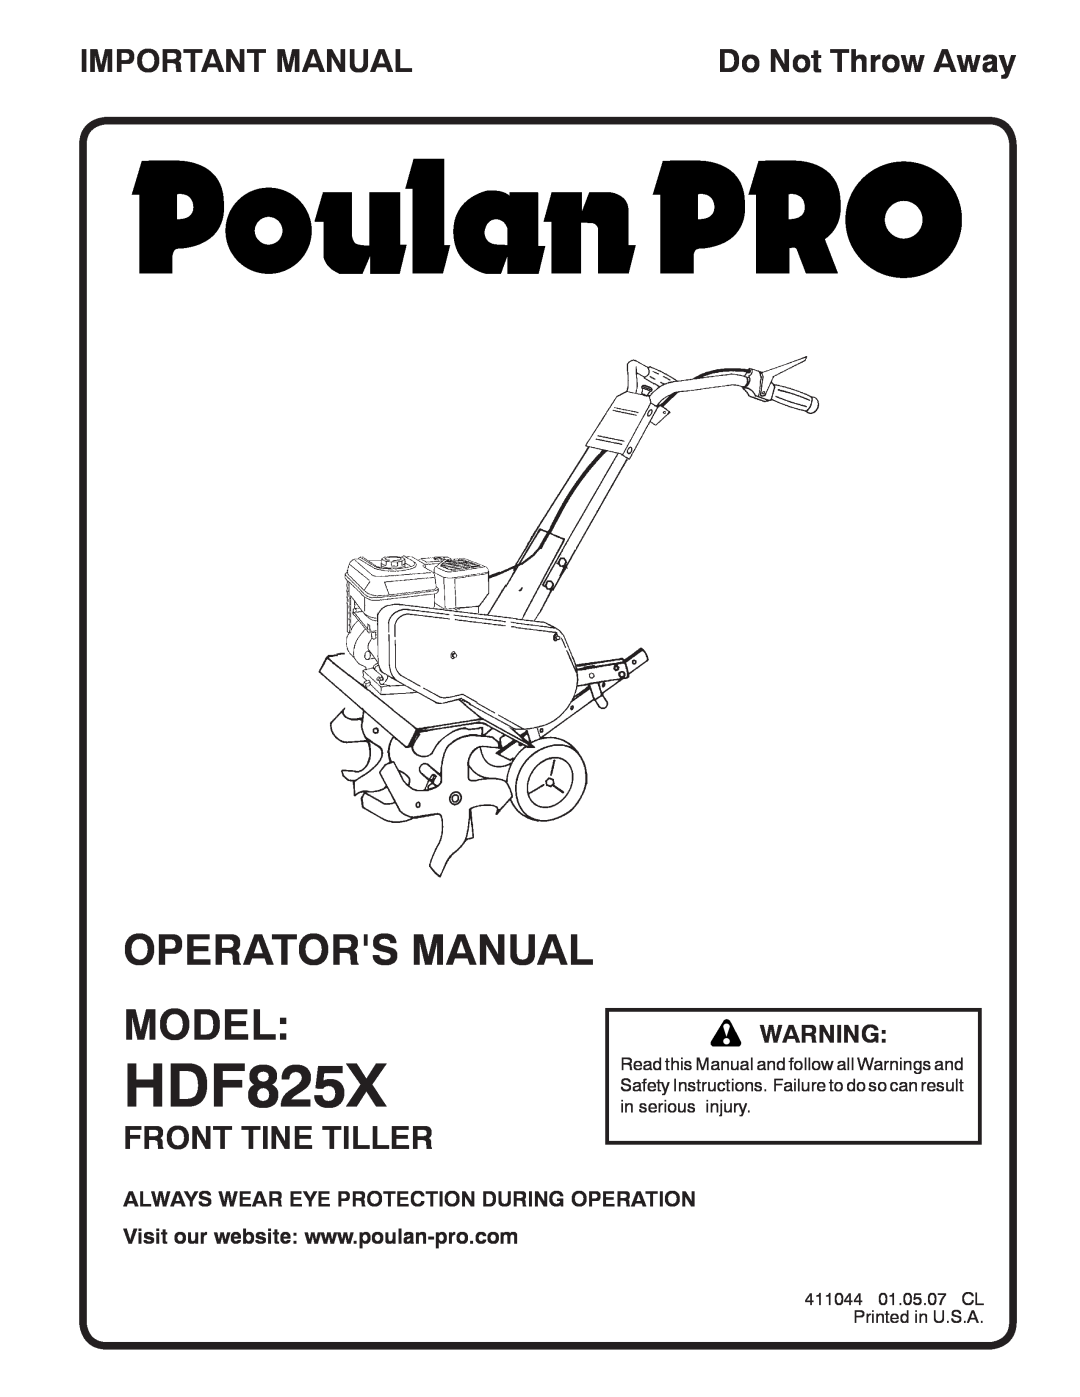 Poulan HDF825X manual Operators Manual Model, Important Manual, Front Tine Tiller, Do Not Throw Away 